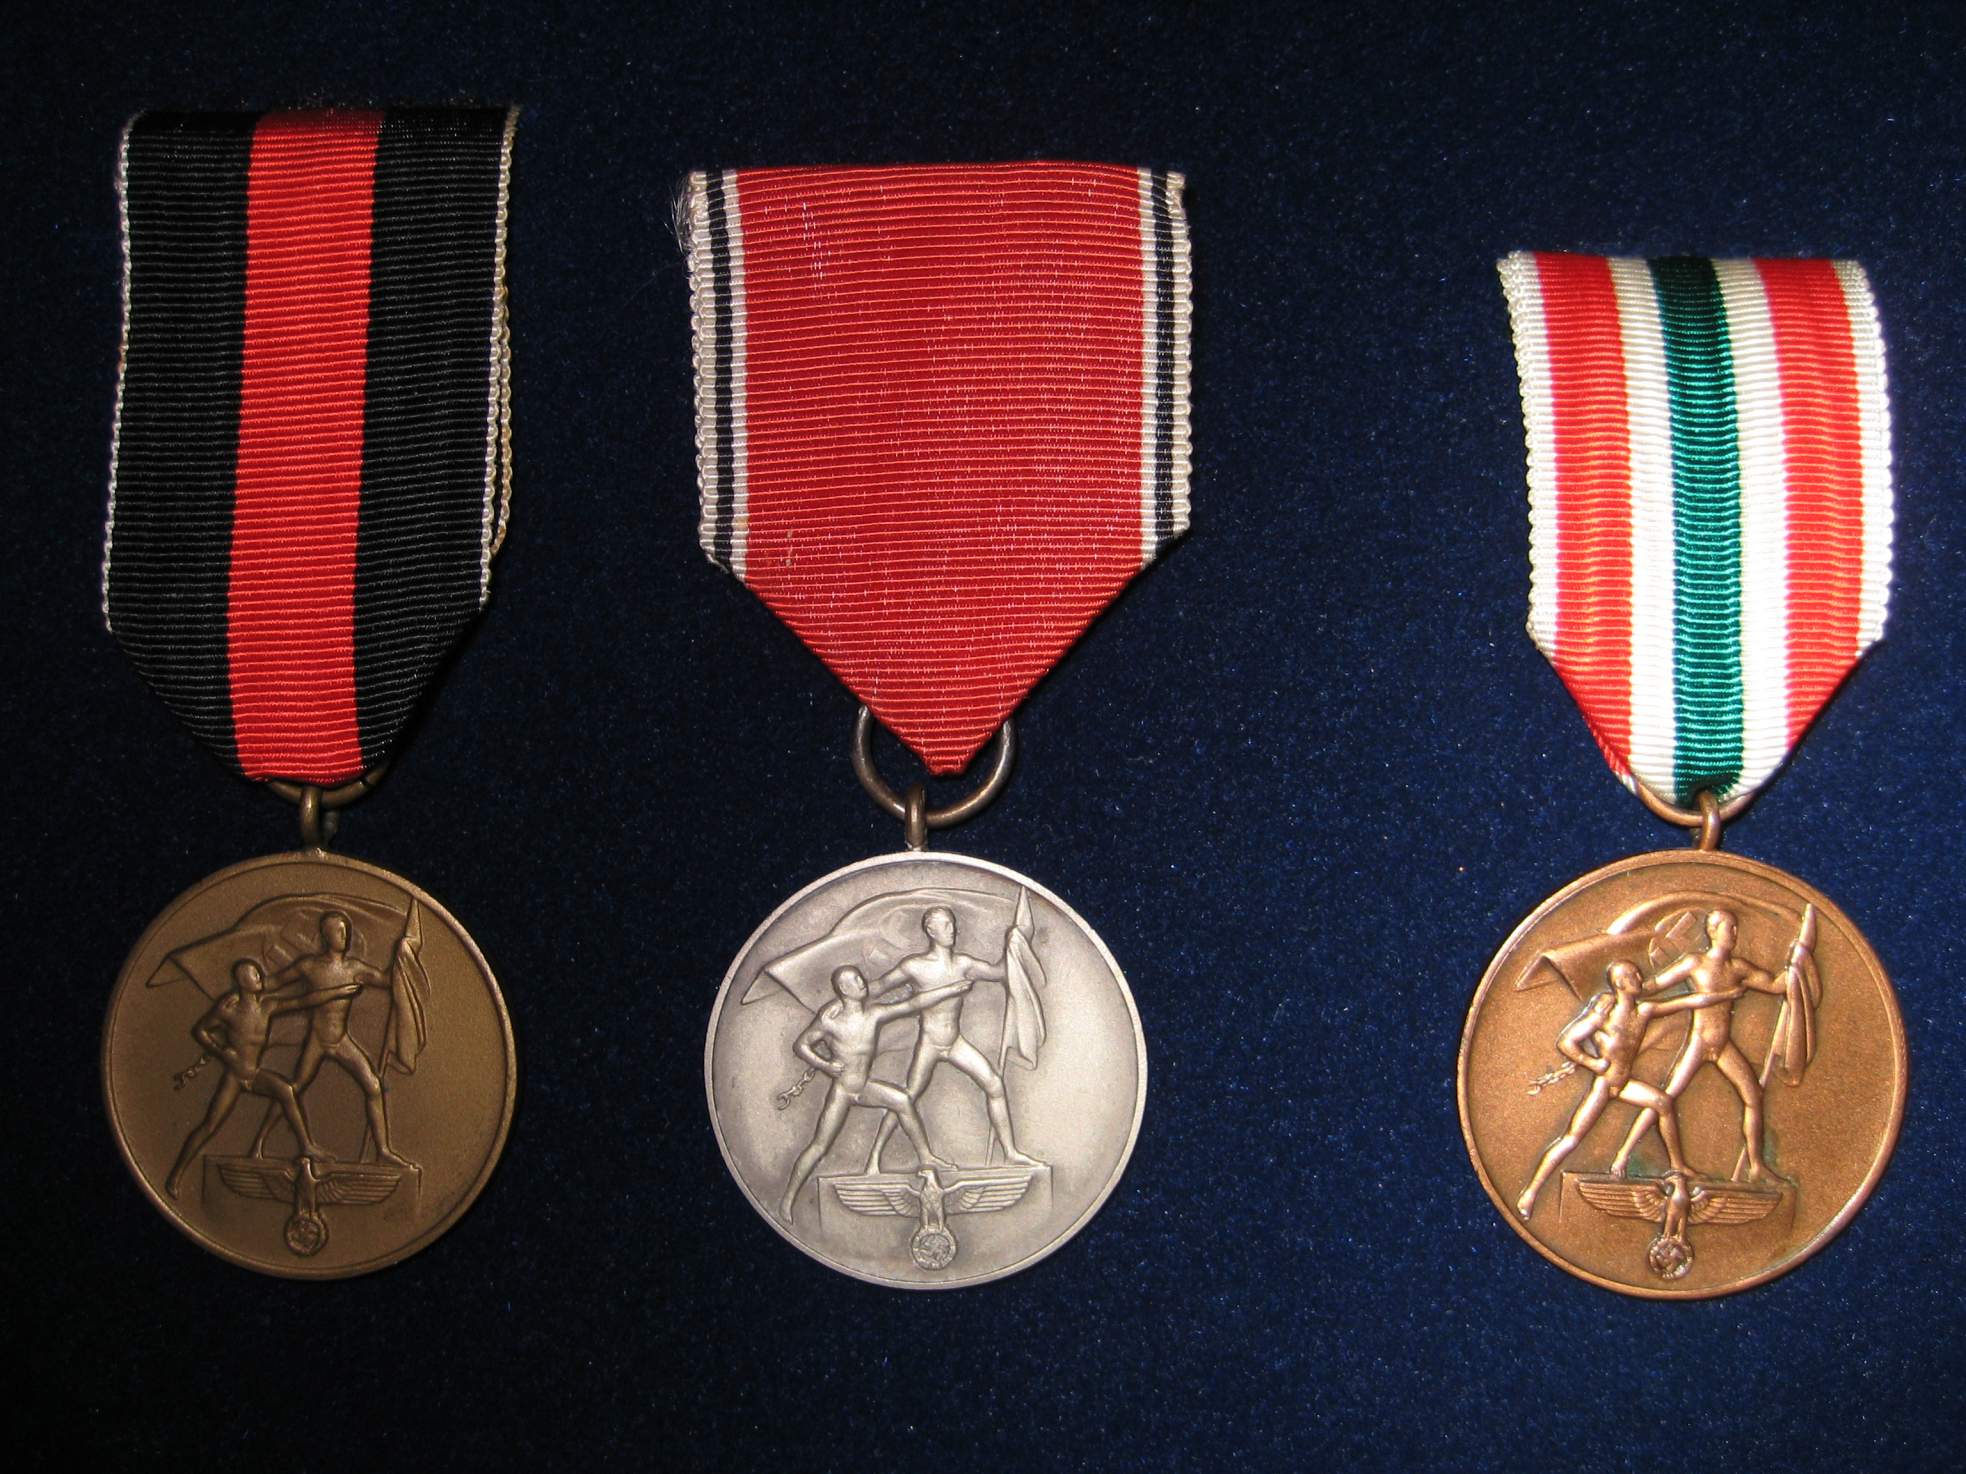 Oktober 1st 1938 cased Sudetenland medal